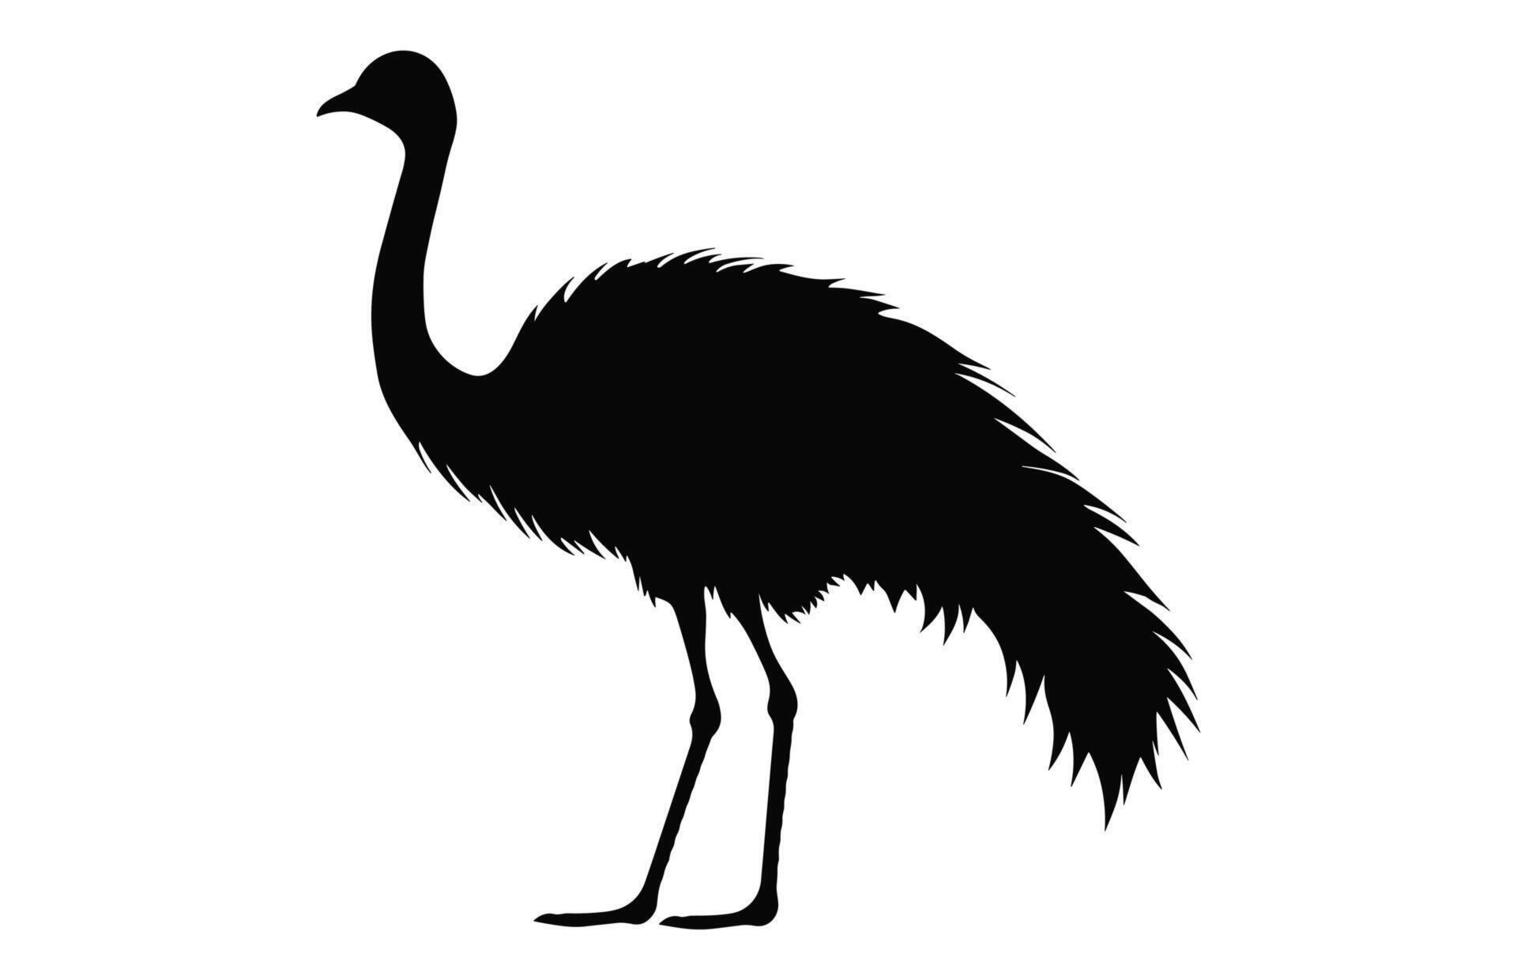 emú silueta aislado en un blanco fondo, un avestruz emú negro silueta, australiano emú pájaro vector